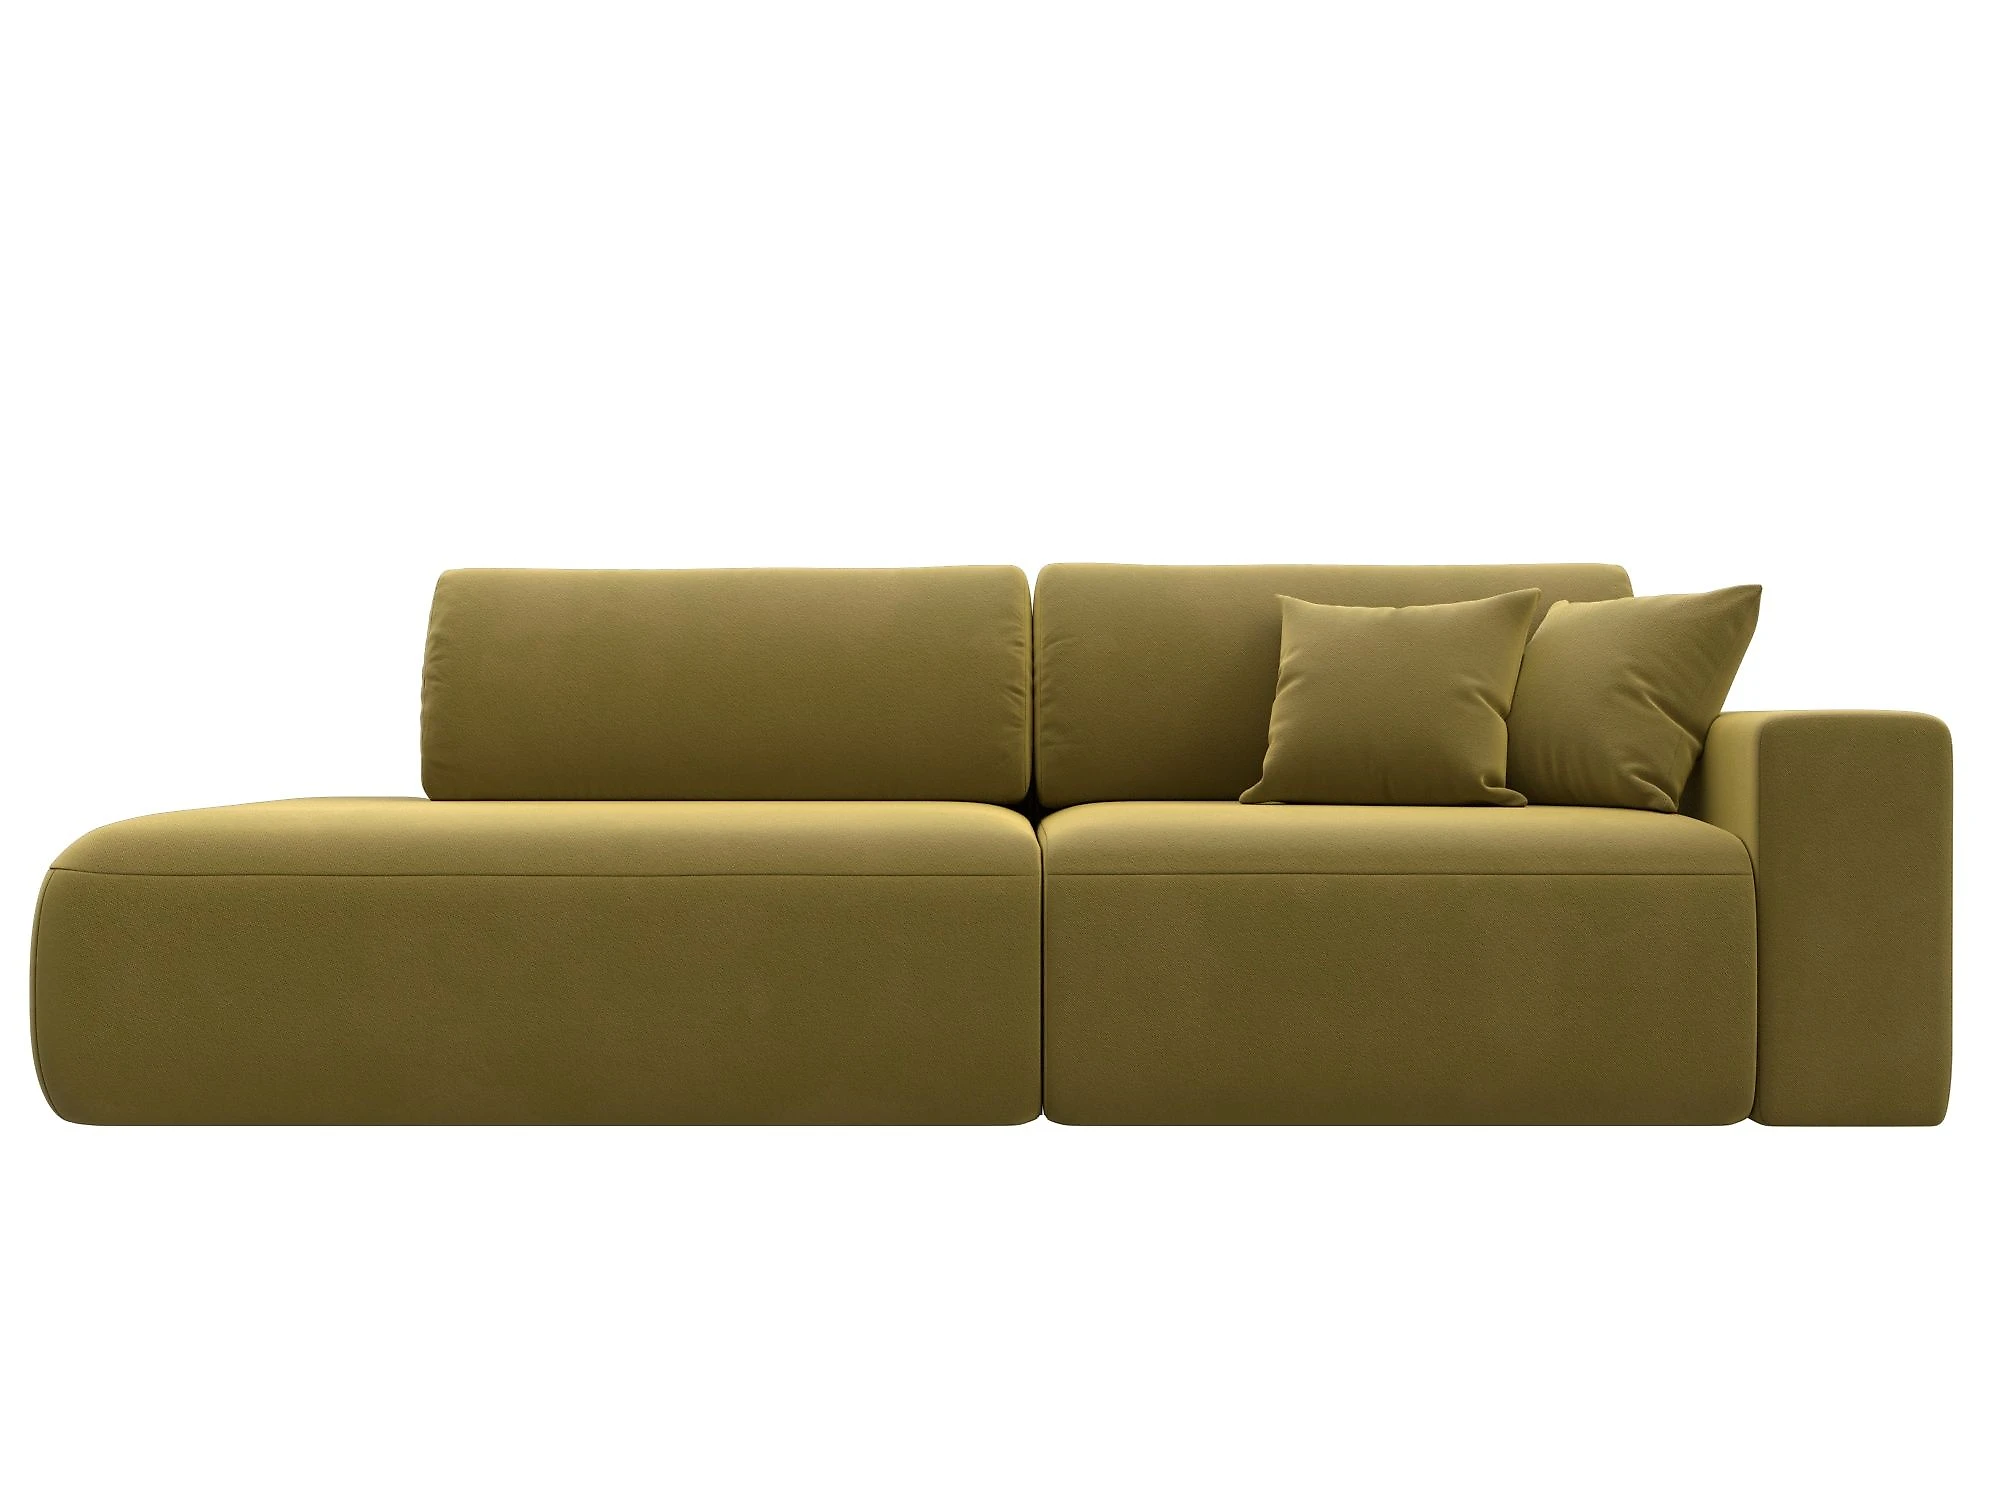 Прямой диван модерн Лига-036 Модерн Дизайн 7